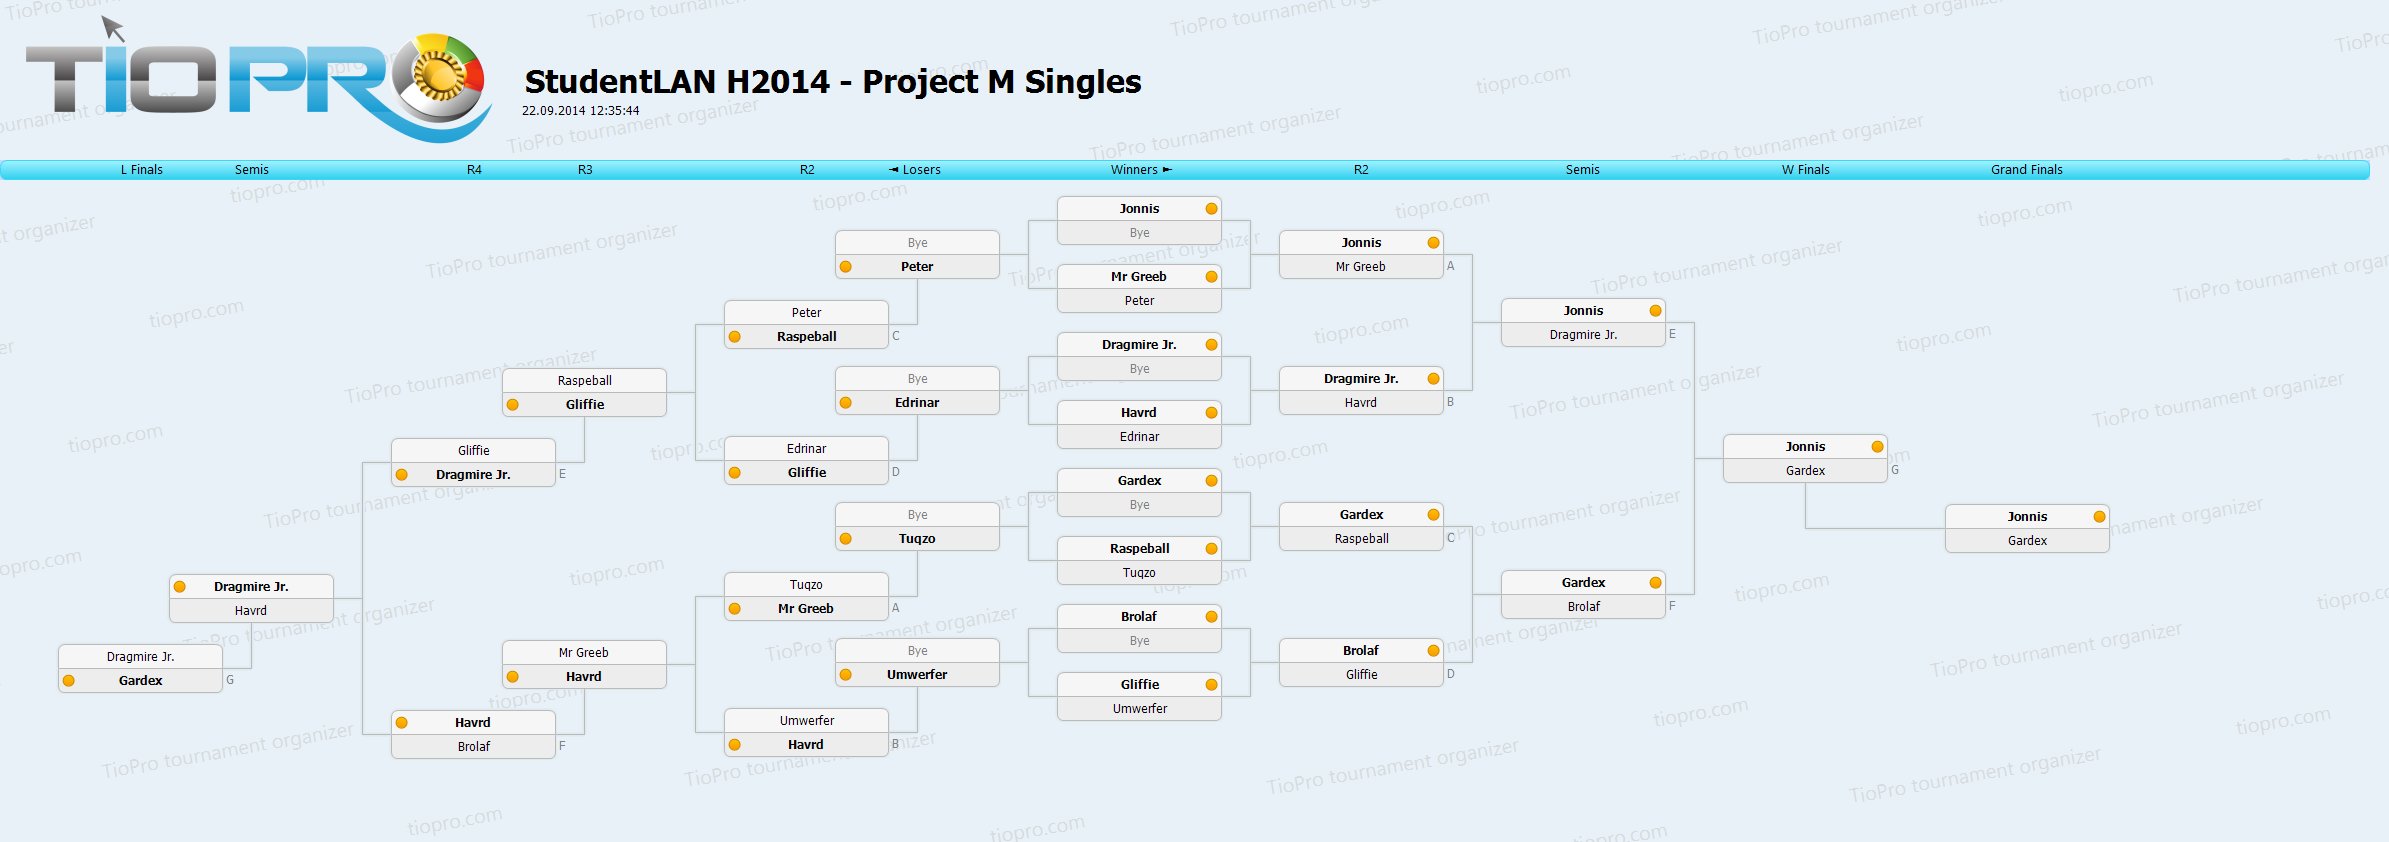 StudentLAN H2014 - Project M Singles